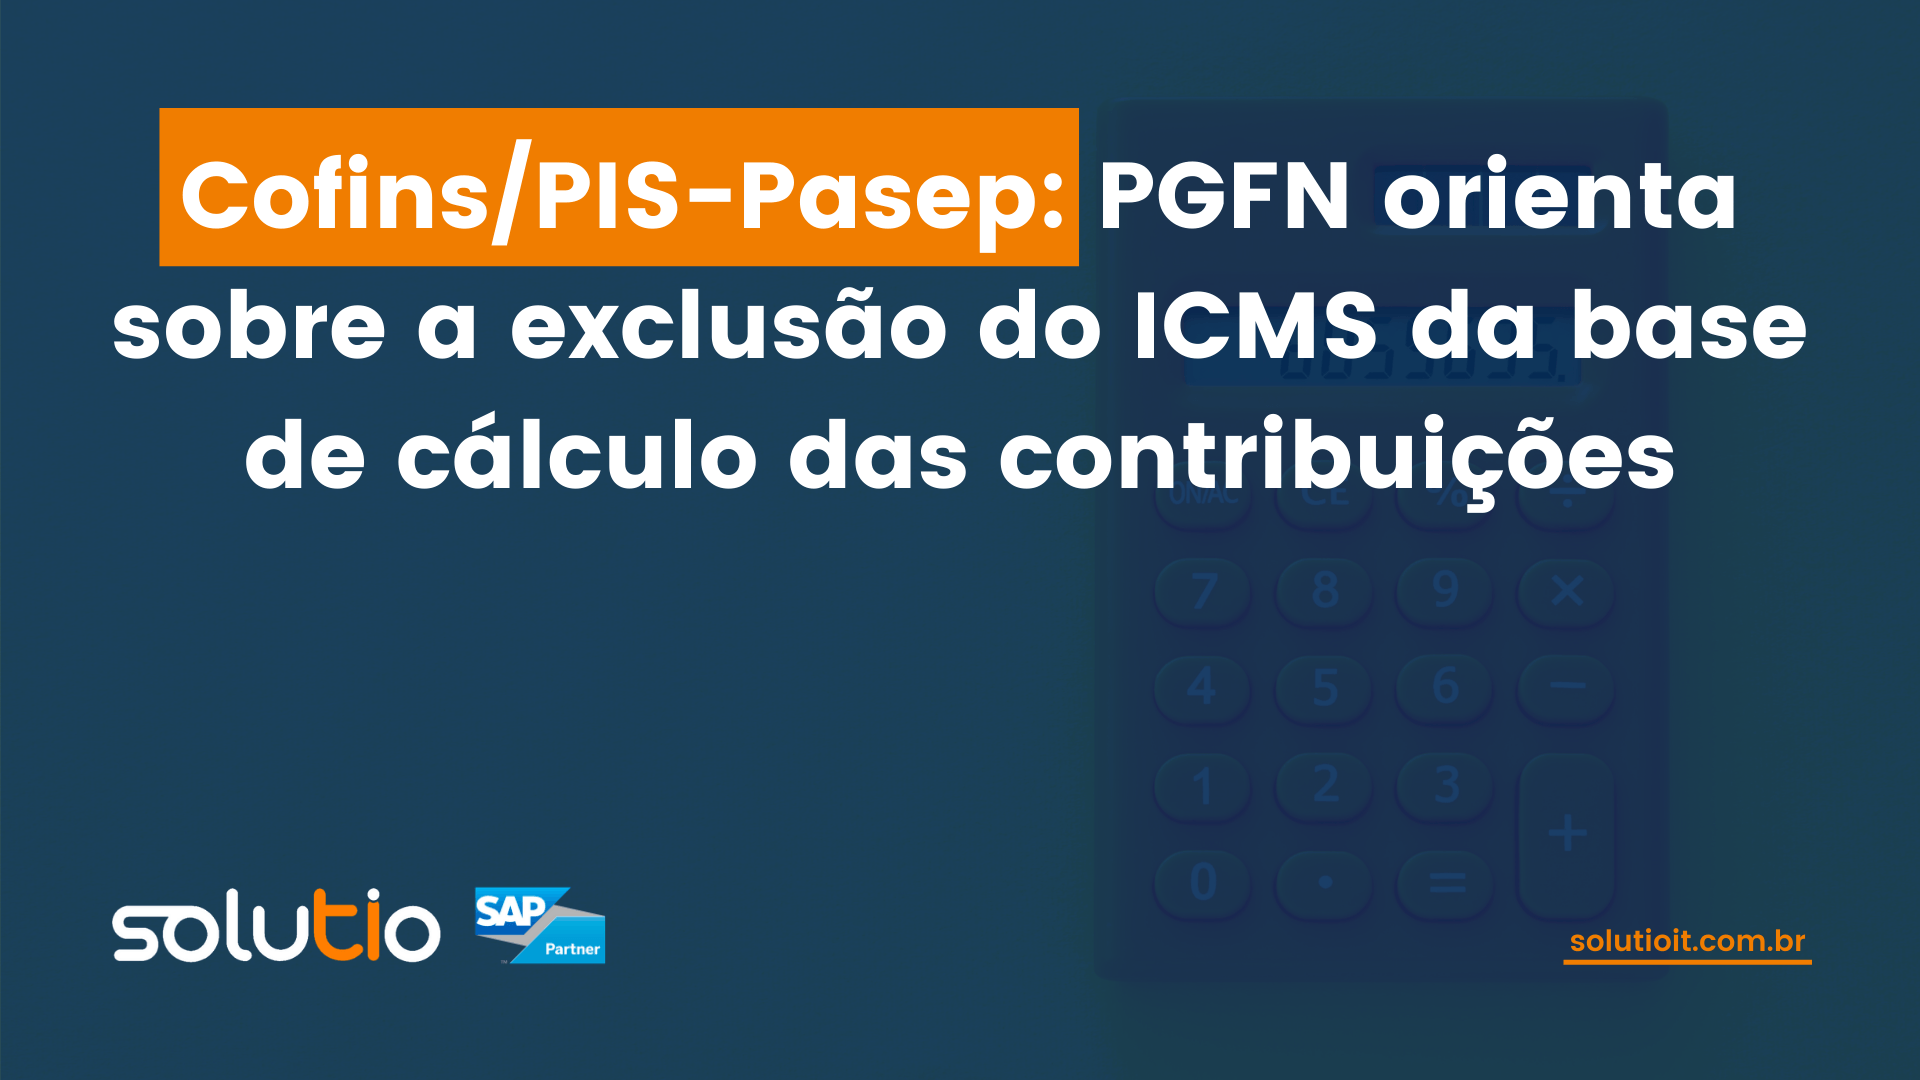 Cofins/PIS-Pasep: PGFN orienta sobre a exclusão do ICMS da base de cálculo das contribuições